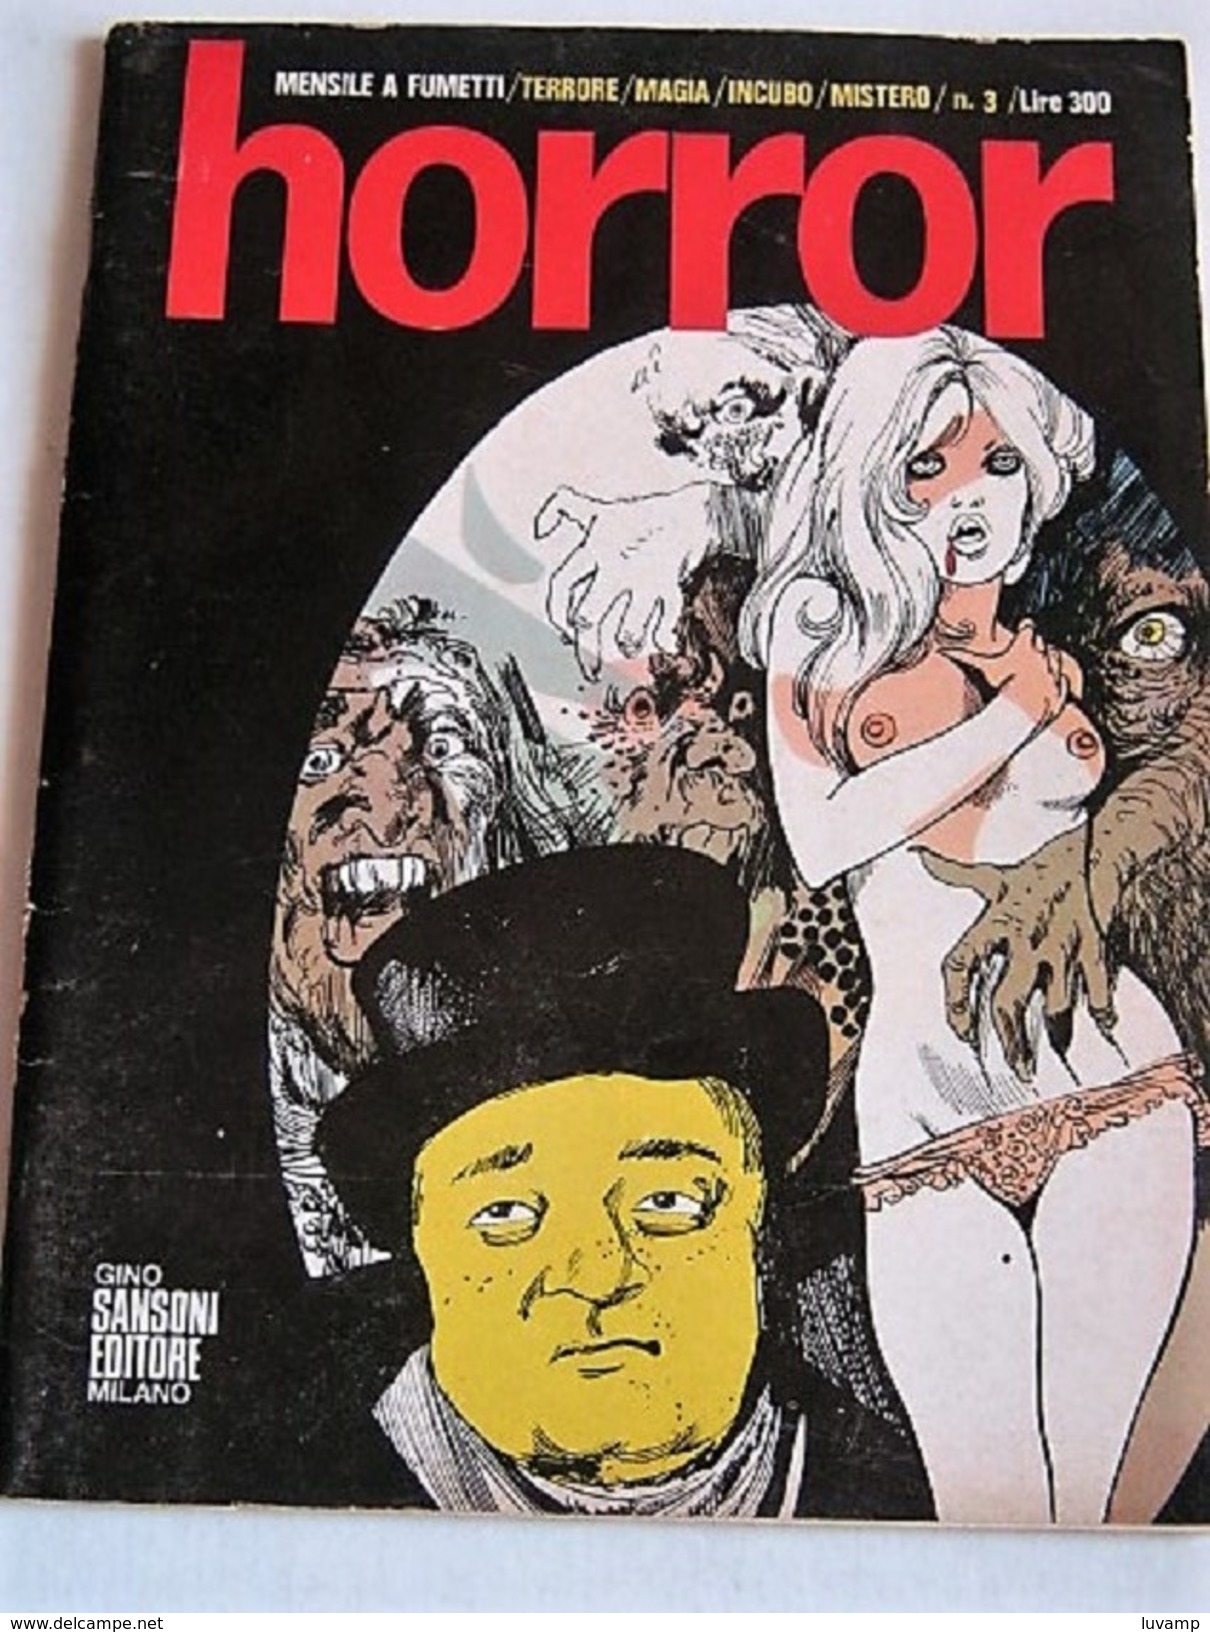 HORROR N°3 EDIZIONI EDITORE SANSONI - FEBBRAIO 1970 ( CART 49) - Premières éditions